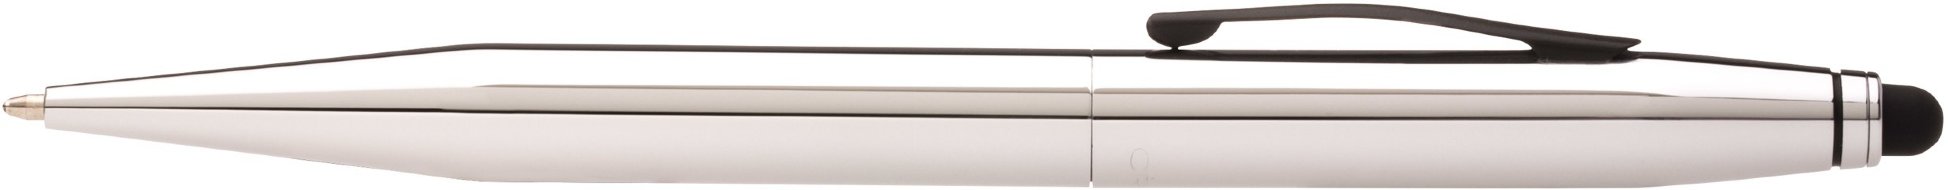 Шариковая ручка со стилусом Cross Tech2, Pure Chrome